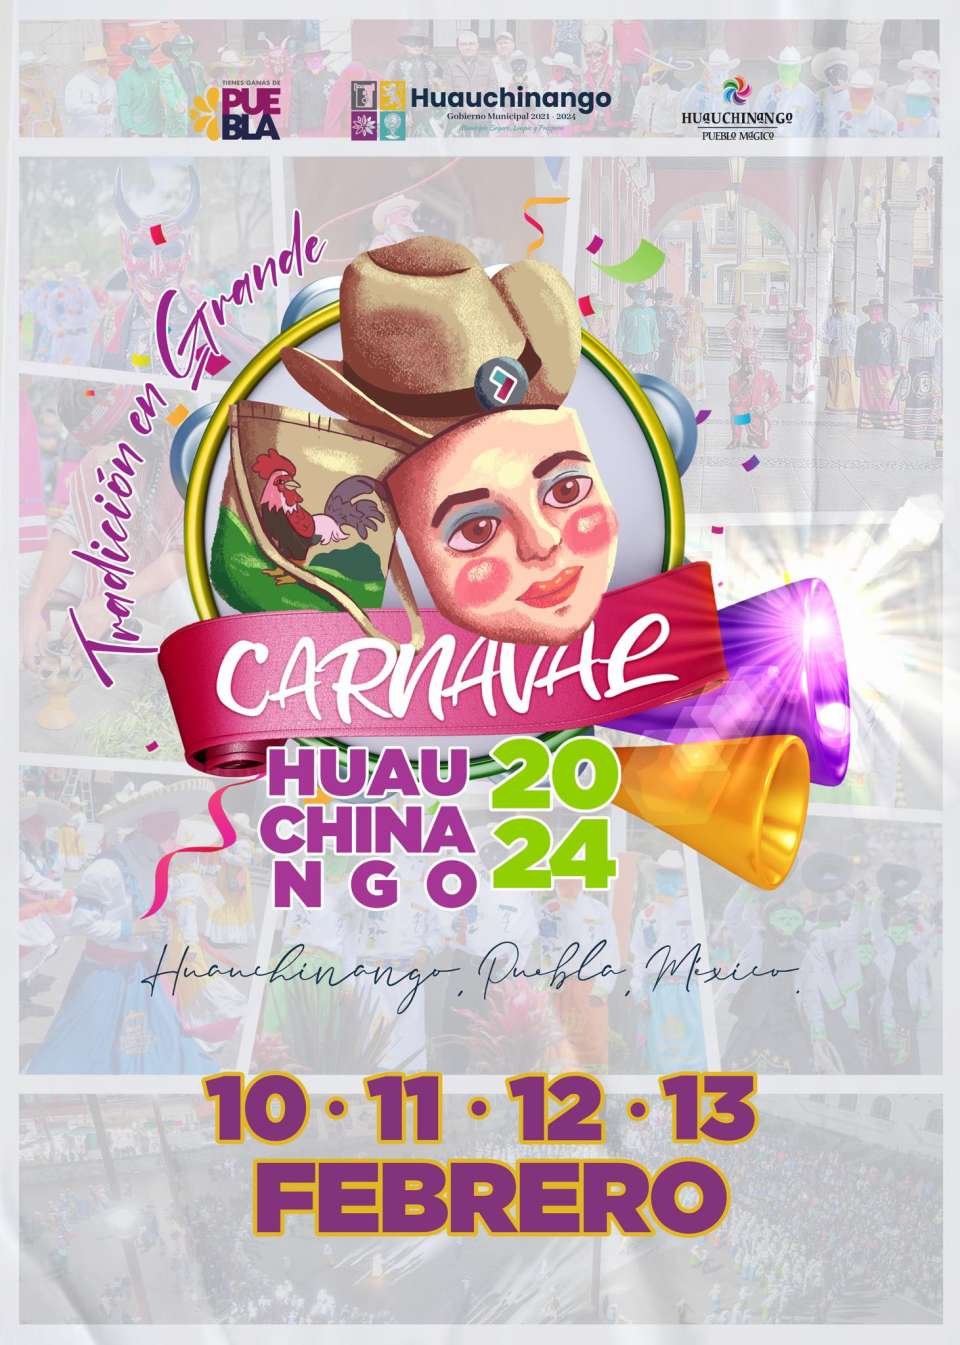 Carnaval de Huauchinango se realizará del 10 al 13 de febrero